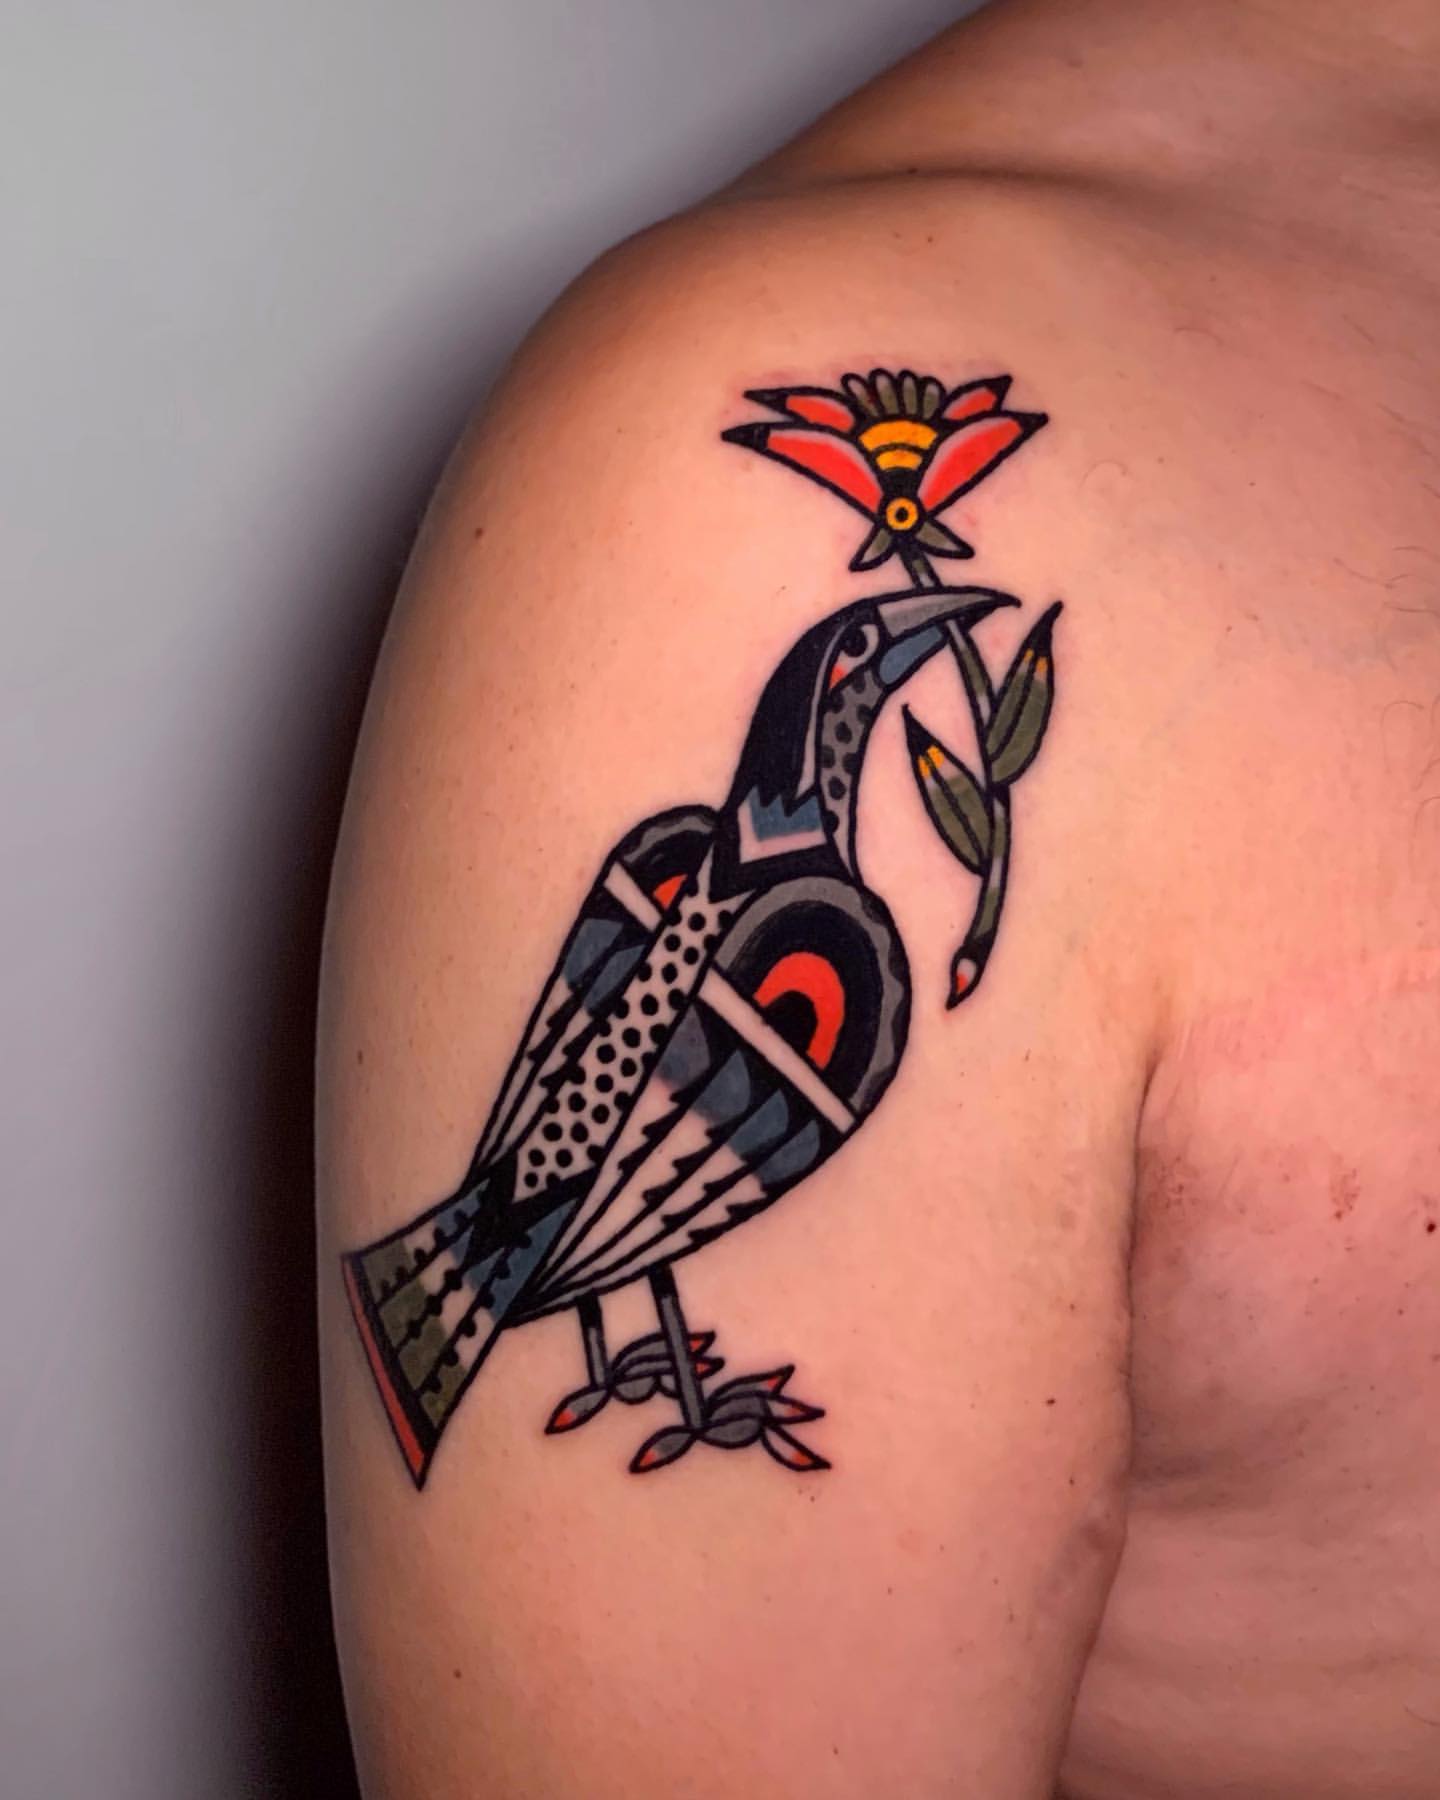 Poster Swallow bird tattoo - PIXERS.US